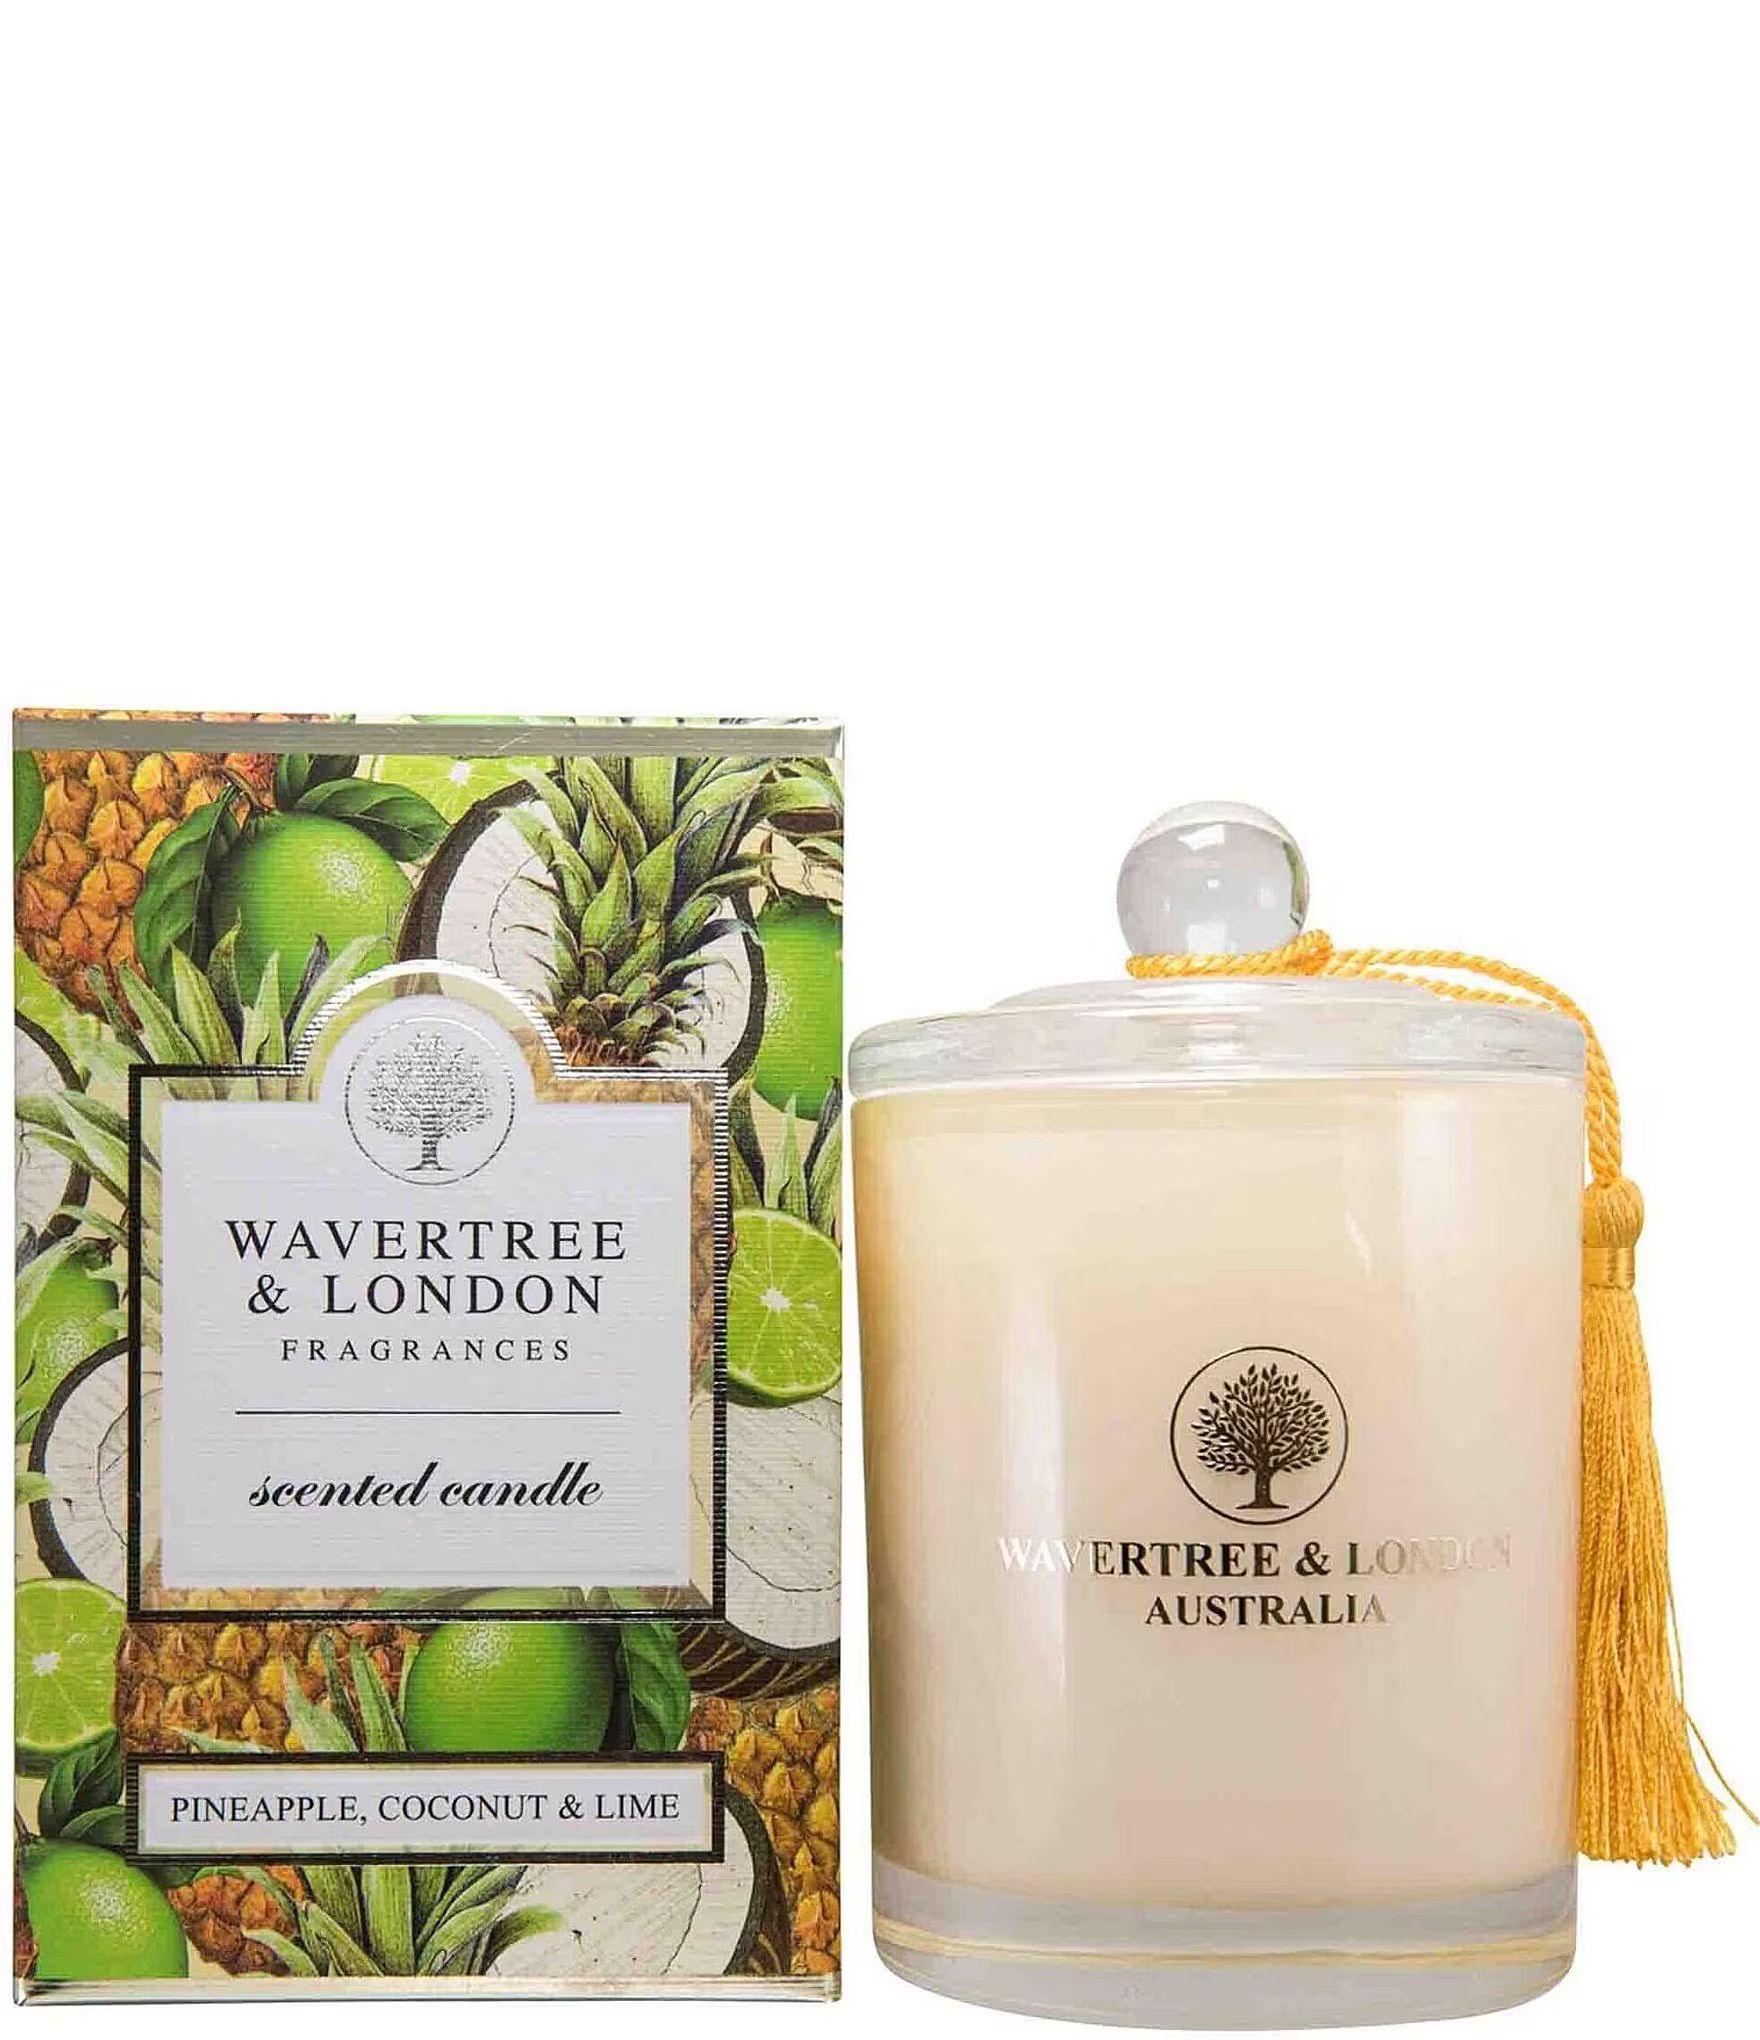 Wavertree & London Pineapple/Coconut/Lime Candle, 11.6-oz. | Dillard's | Dillard's